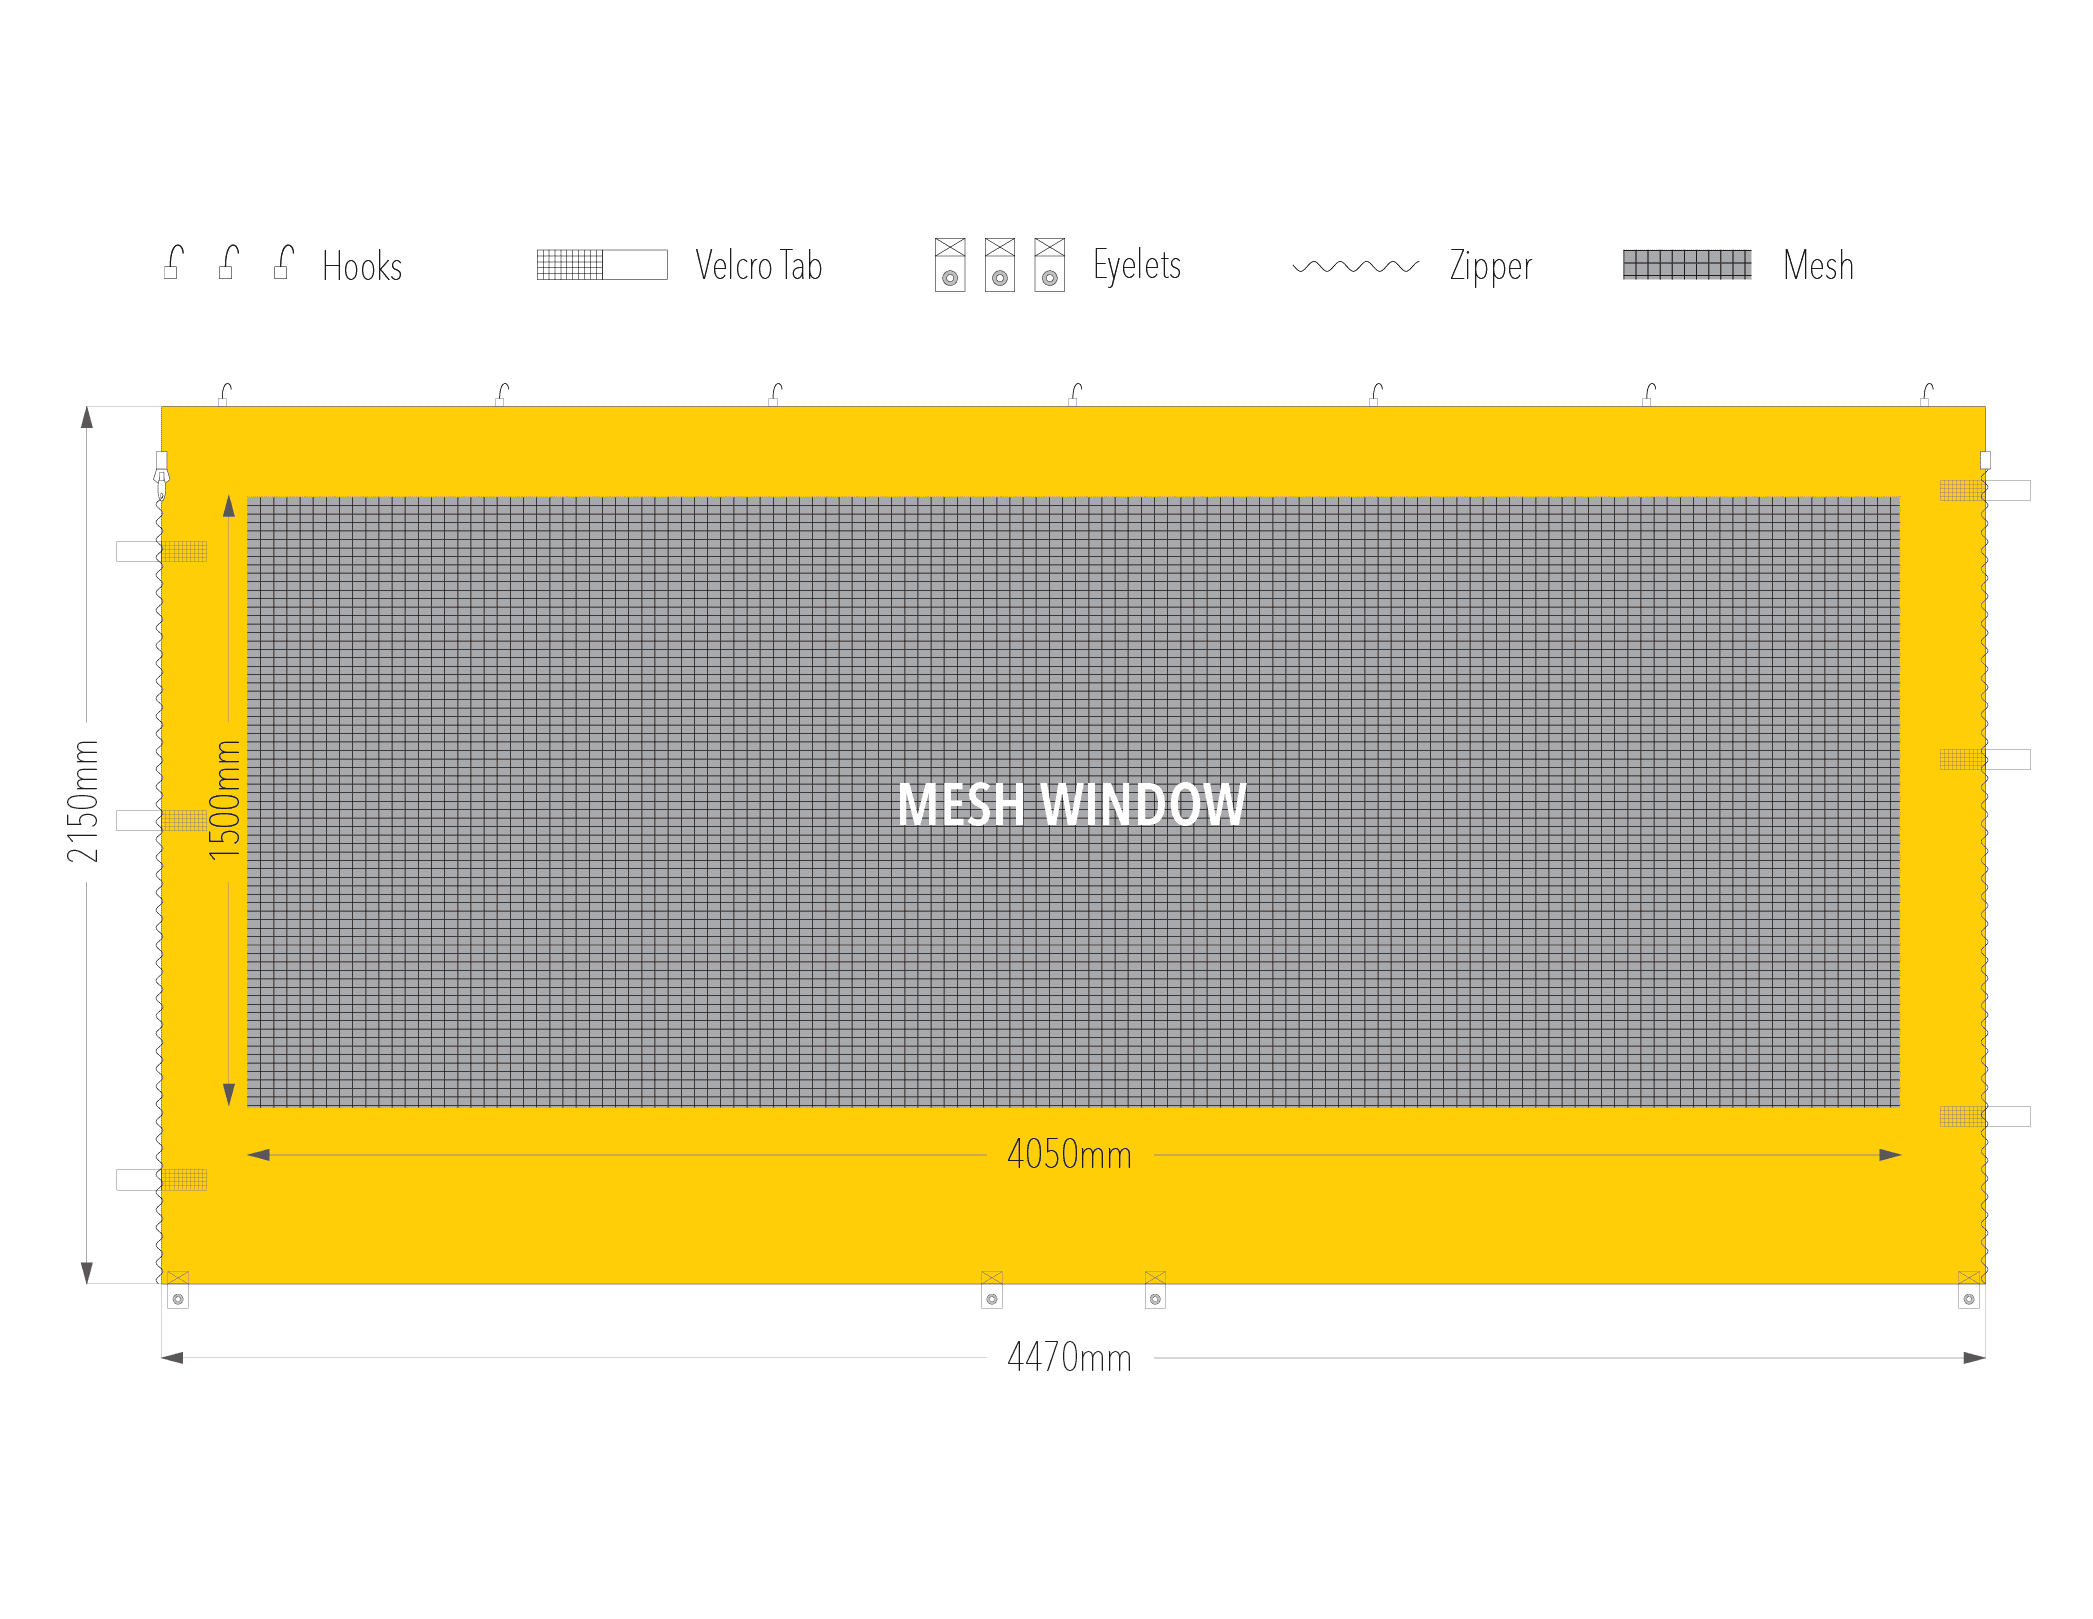 4.5m mesh window wall diagram